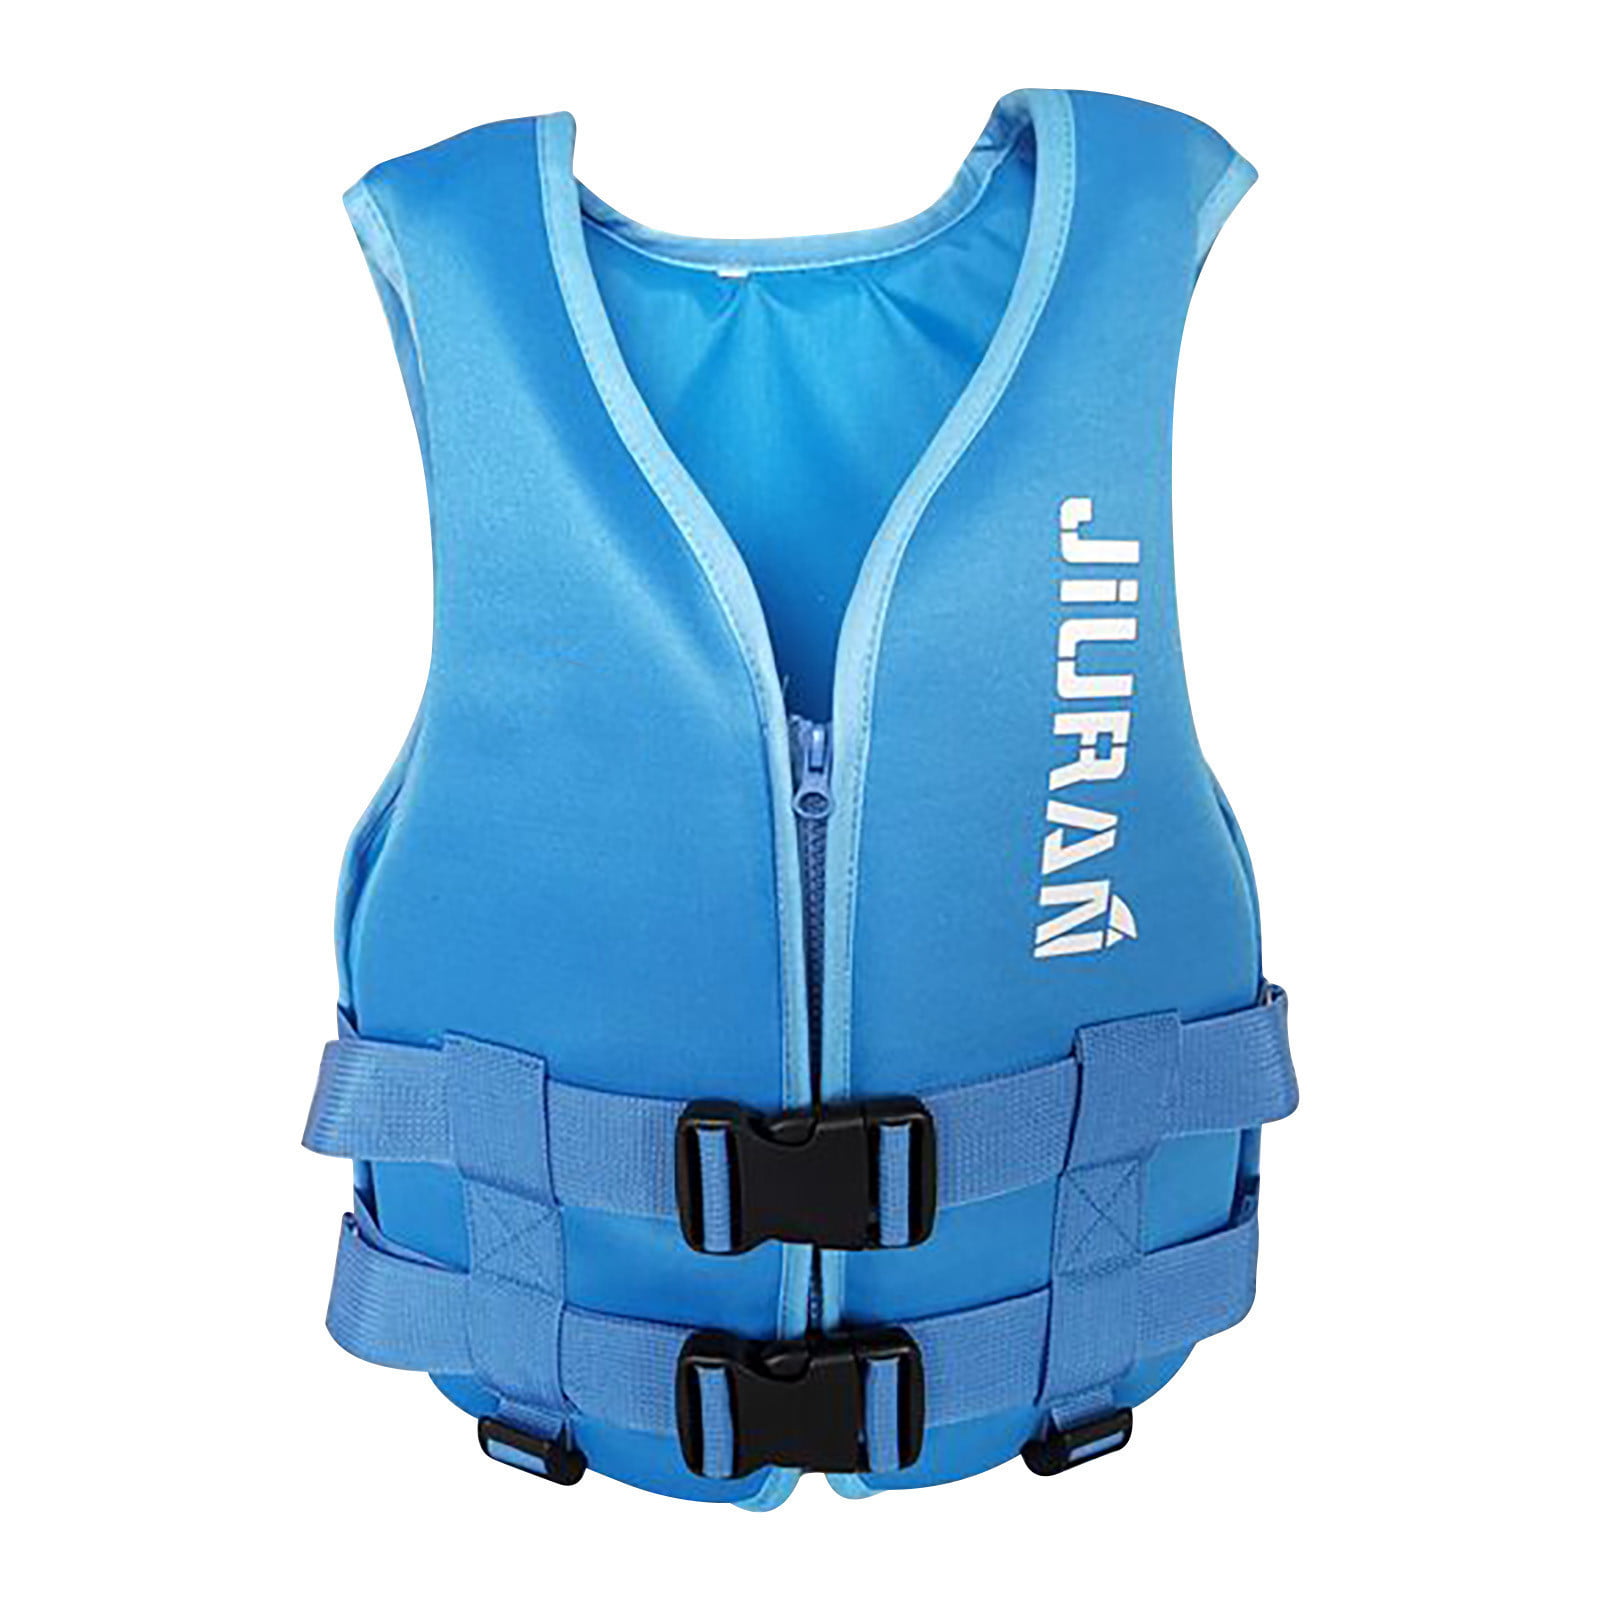 Kid Adult Life Jackets Vest Kayak Buoyancy Aid Safe Sailing Swim Watersports 